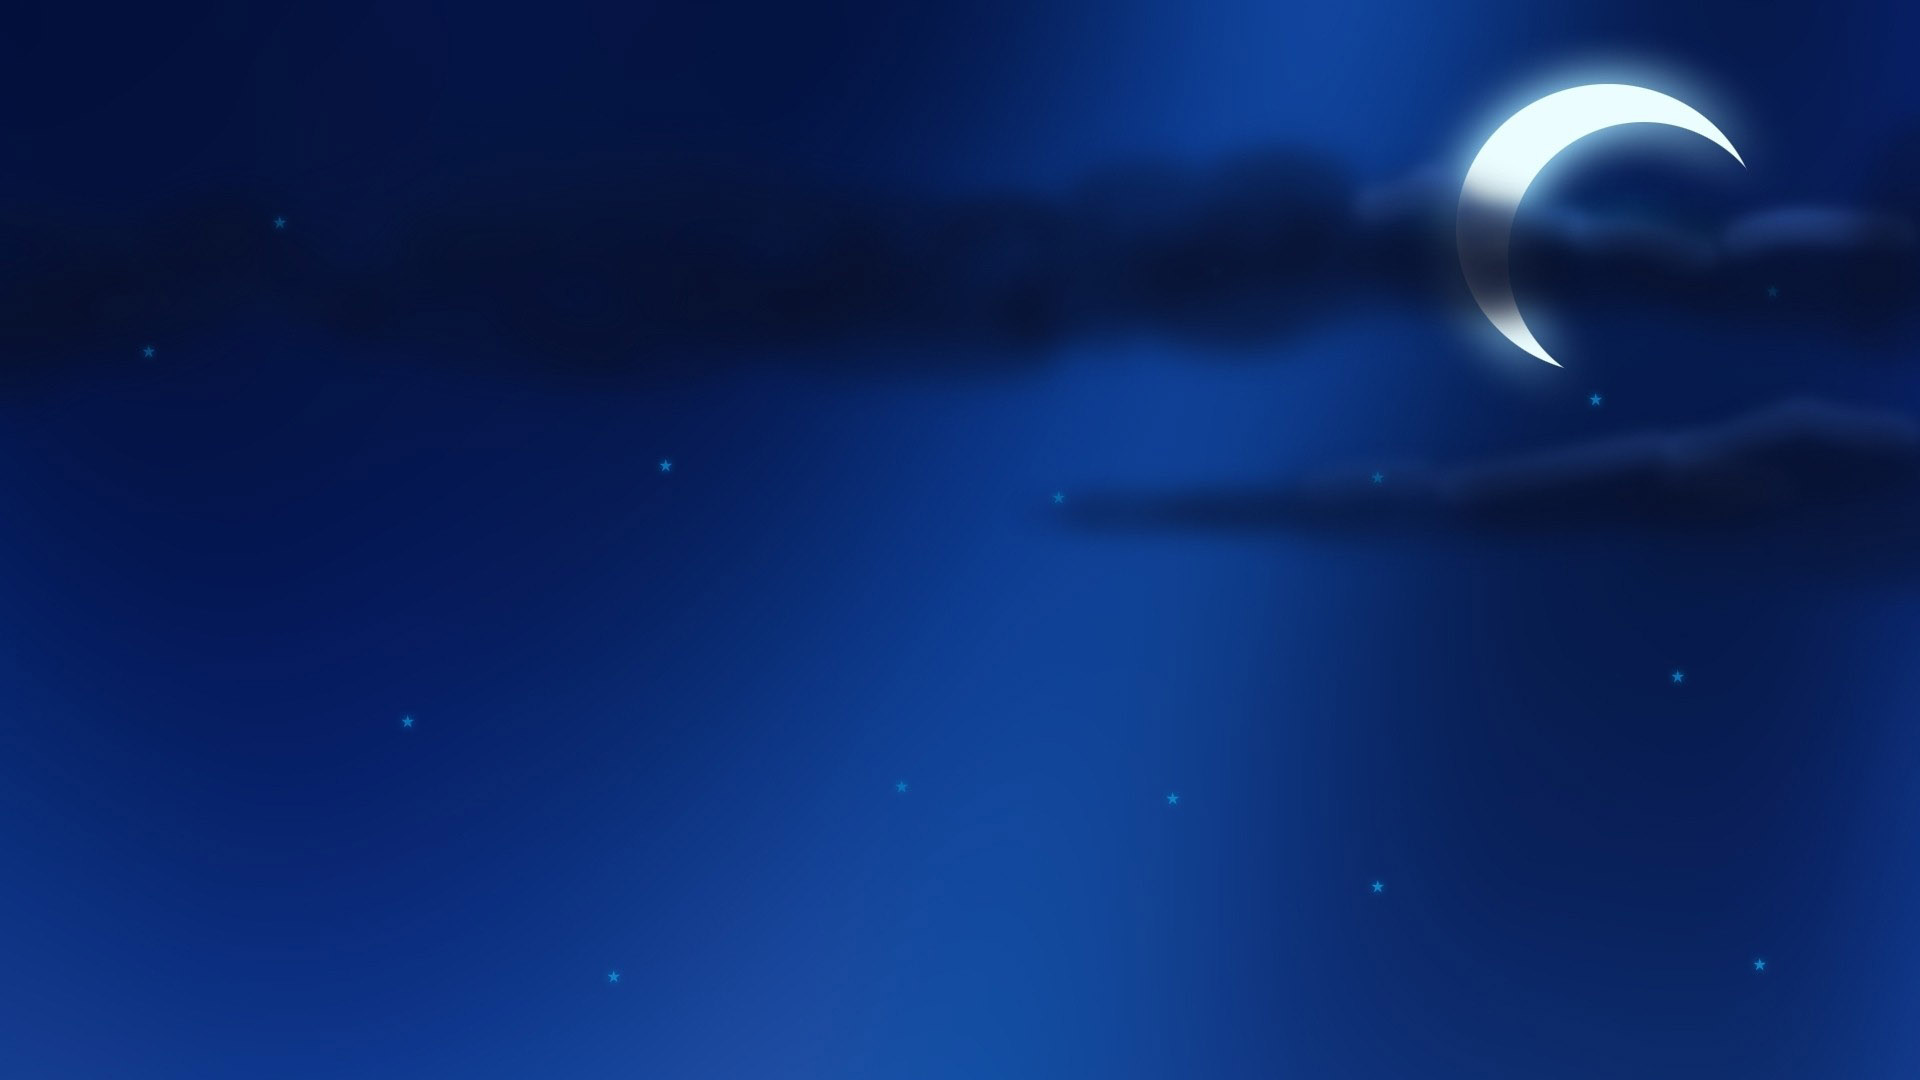 Blue moon and stars desktop wallpaper